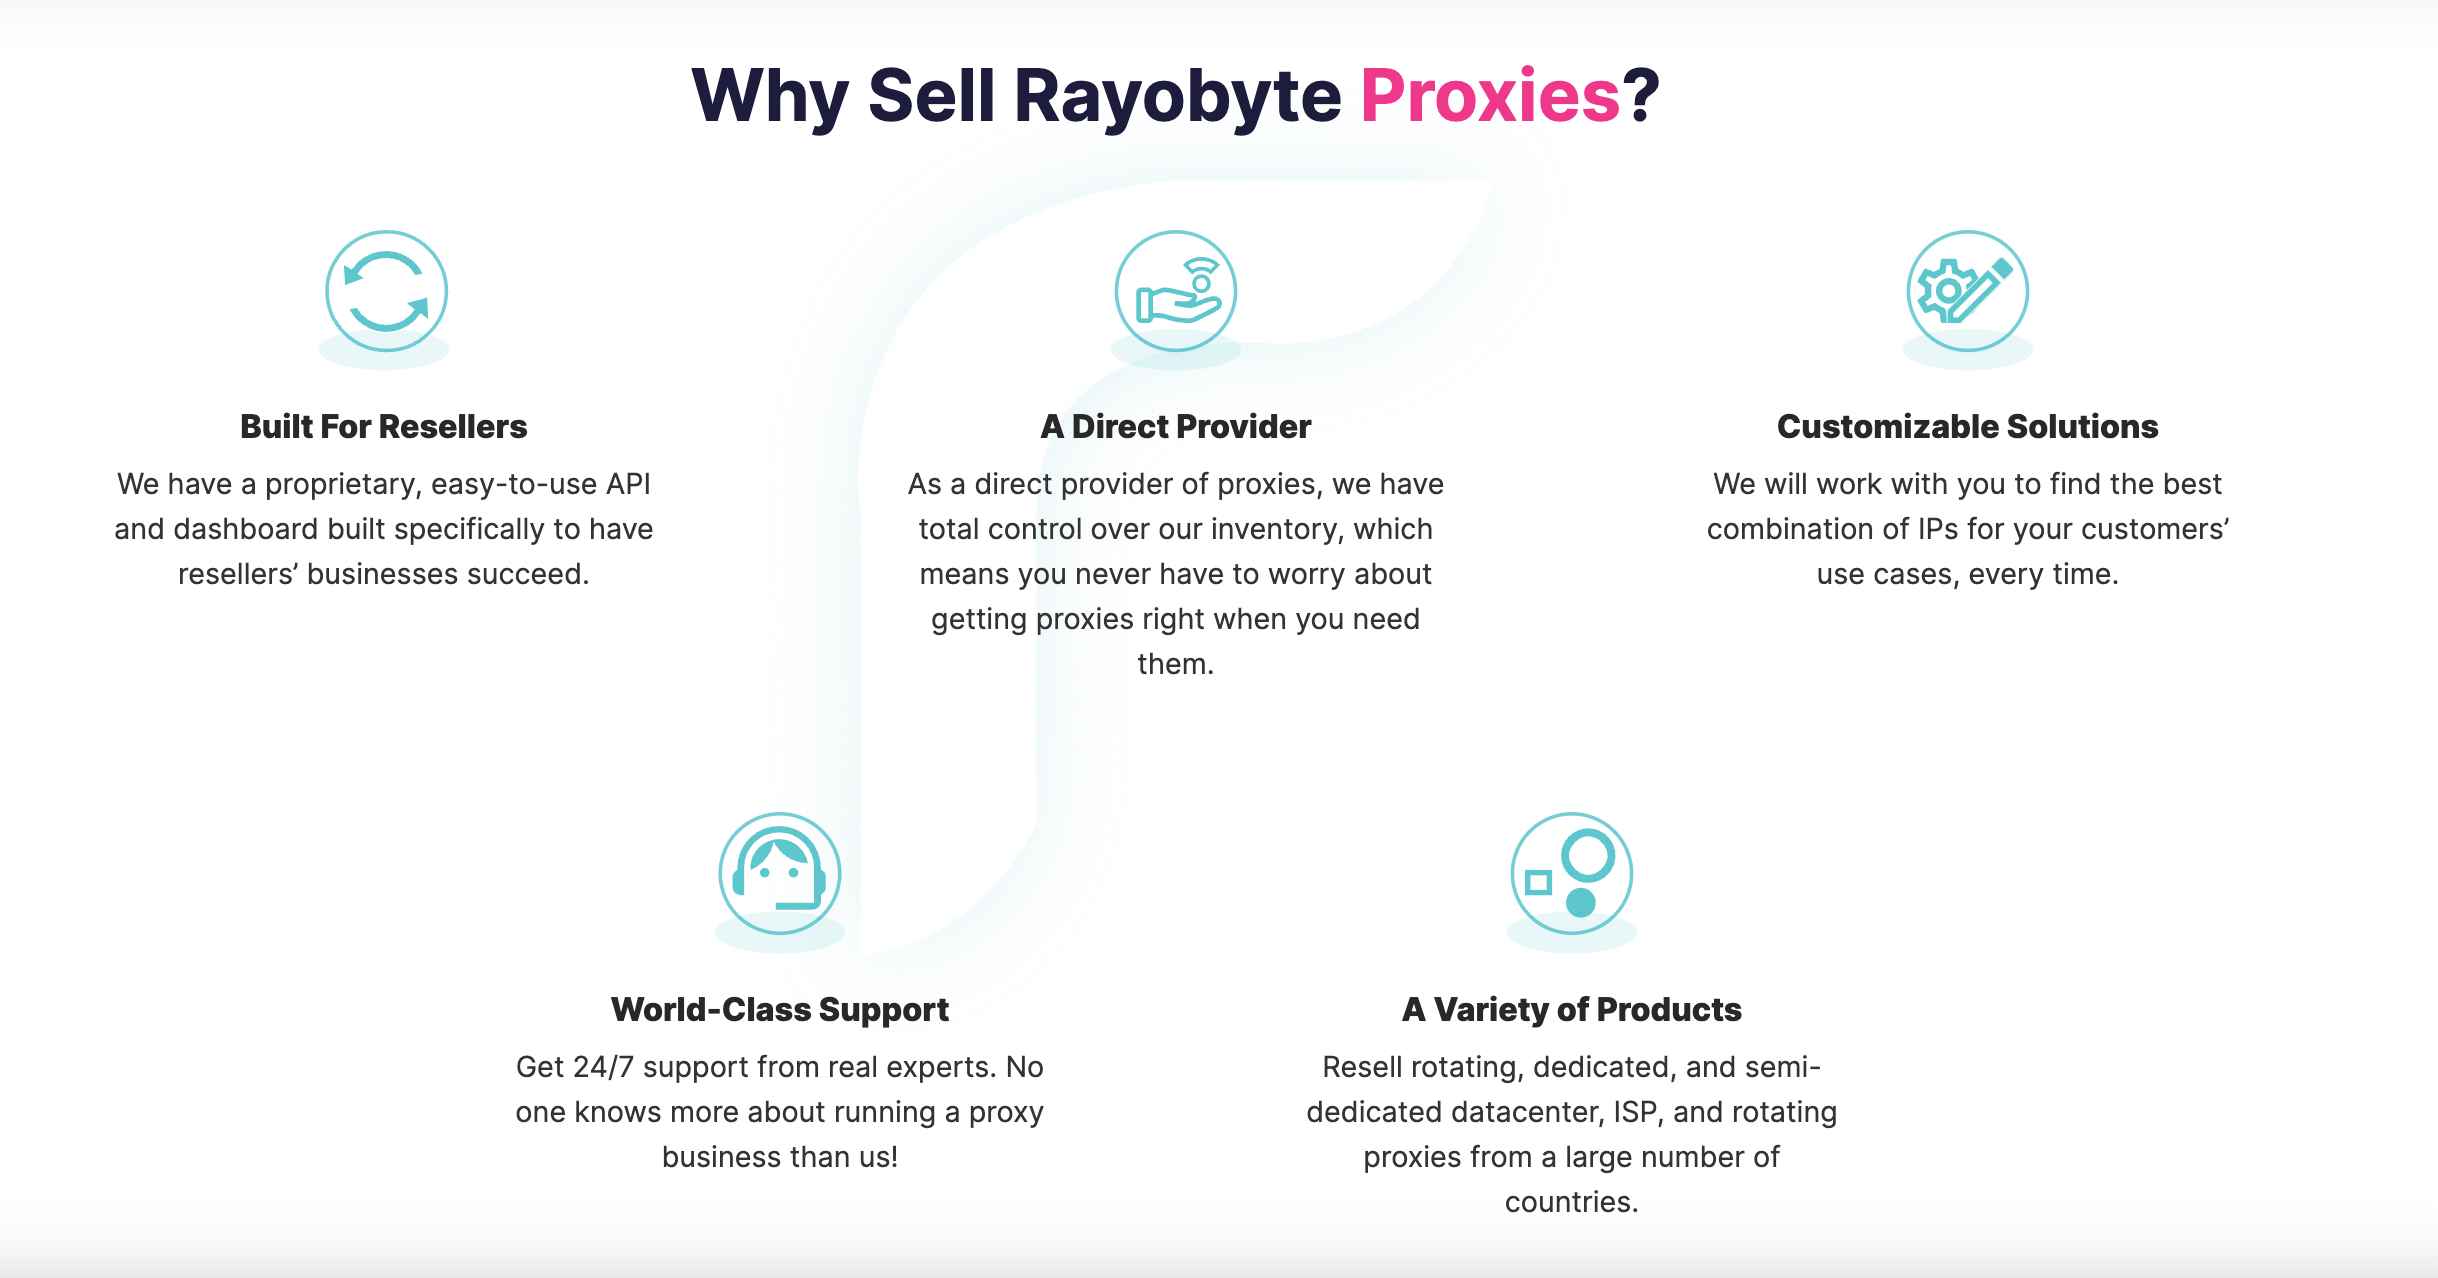 Reasons to Sell Rayobyte Proxies